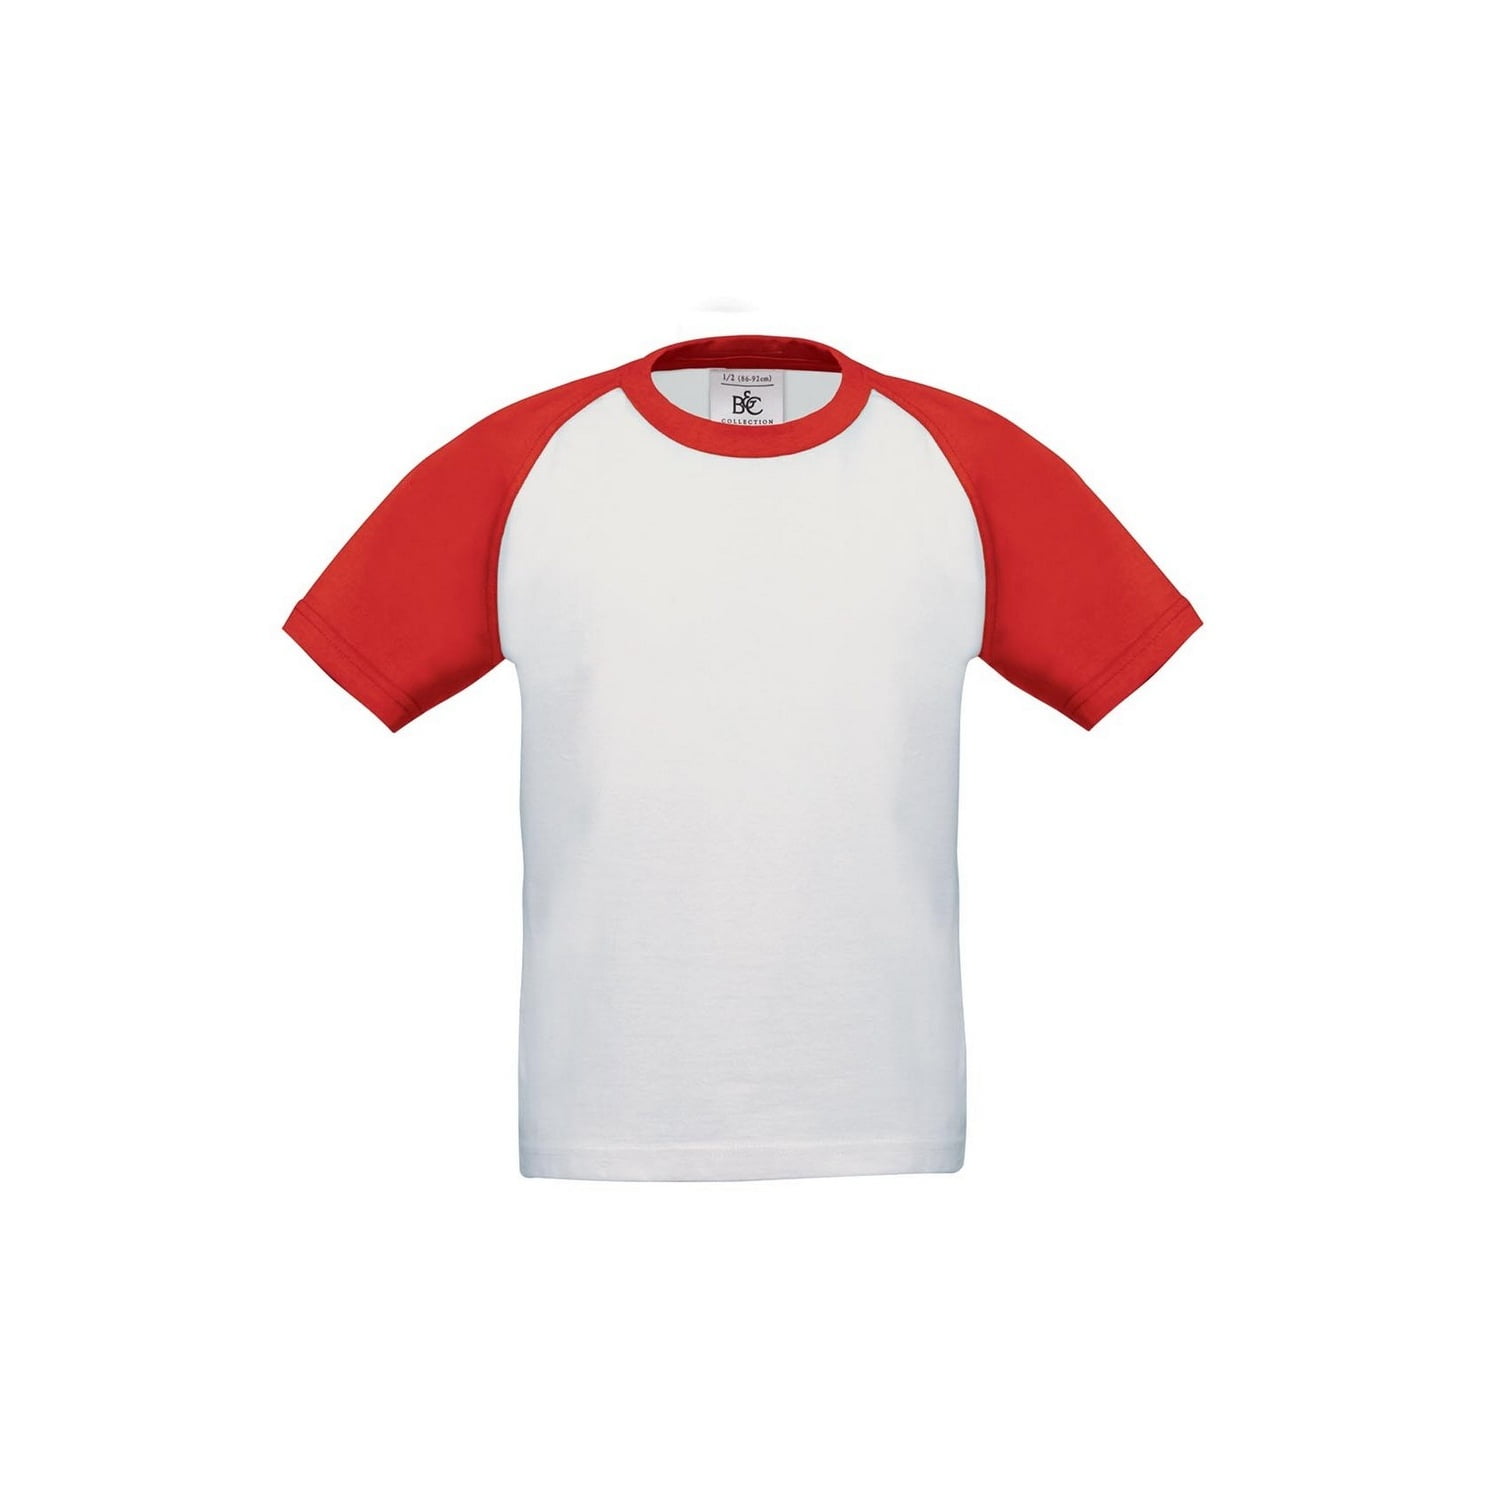 RW3489 B&C Childrens/Kids Boys Short Sleeve Baseball/Contrast Summer T-Shirt 